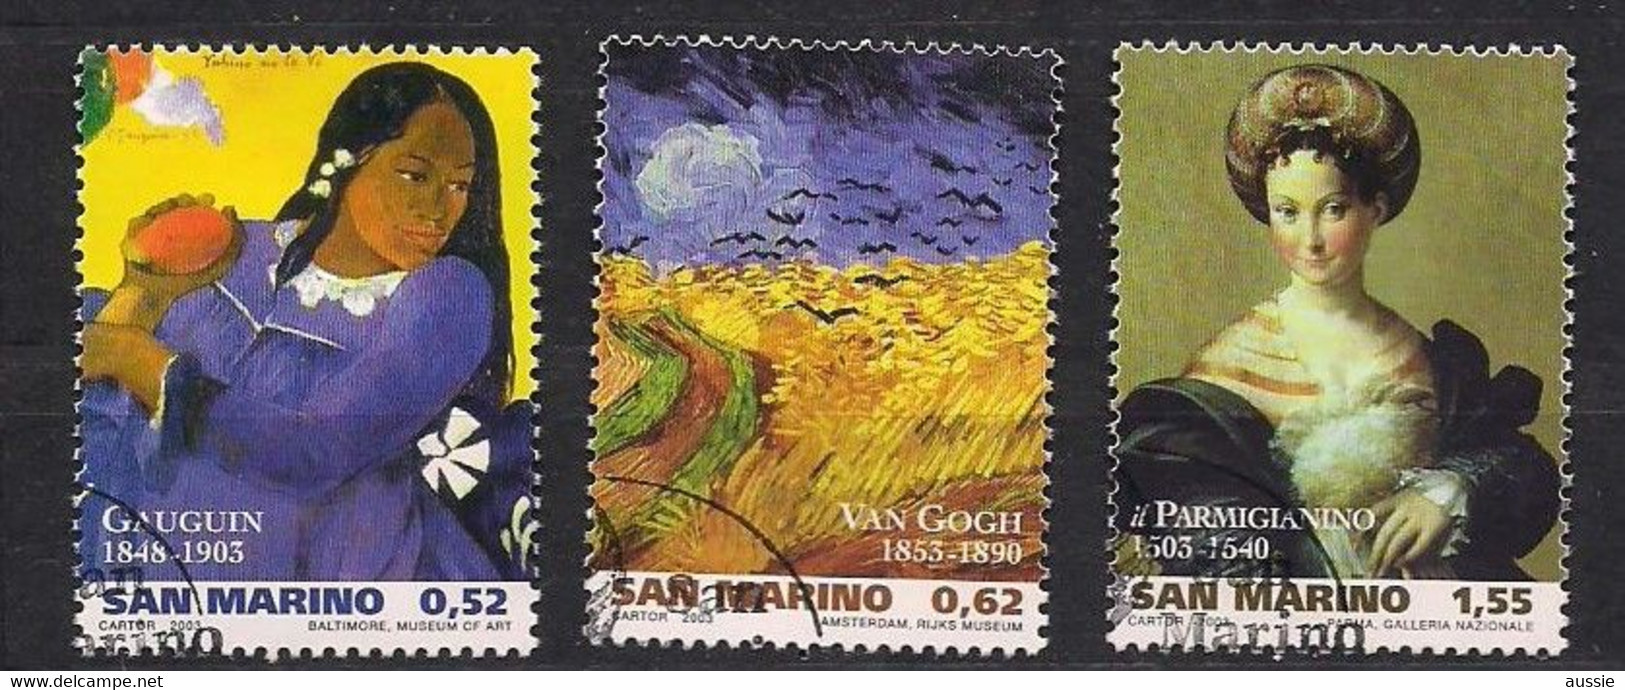 San Marino Saint-Marin 2003 Yvertn° 1858-1860 (°) Oblitéré Used Cote 6,50  € Tableaux Divers Gauguin Van Gogh - Used Stamps